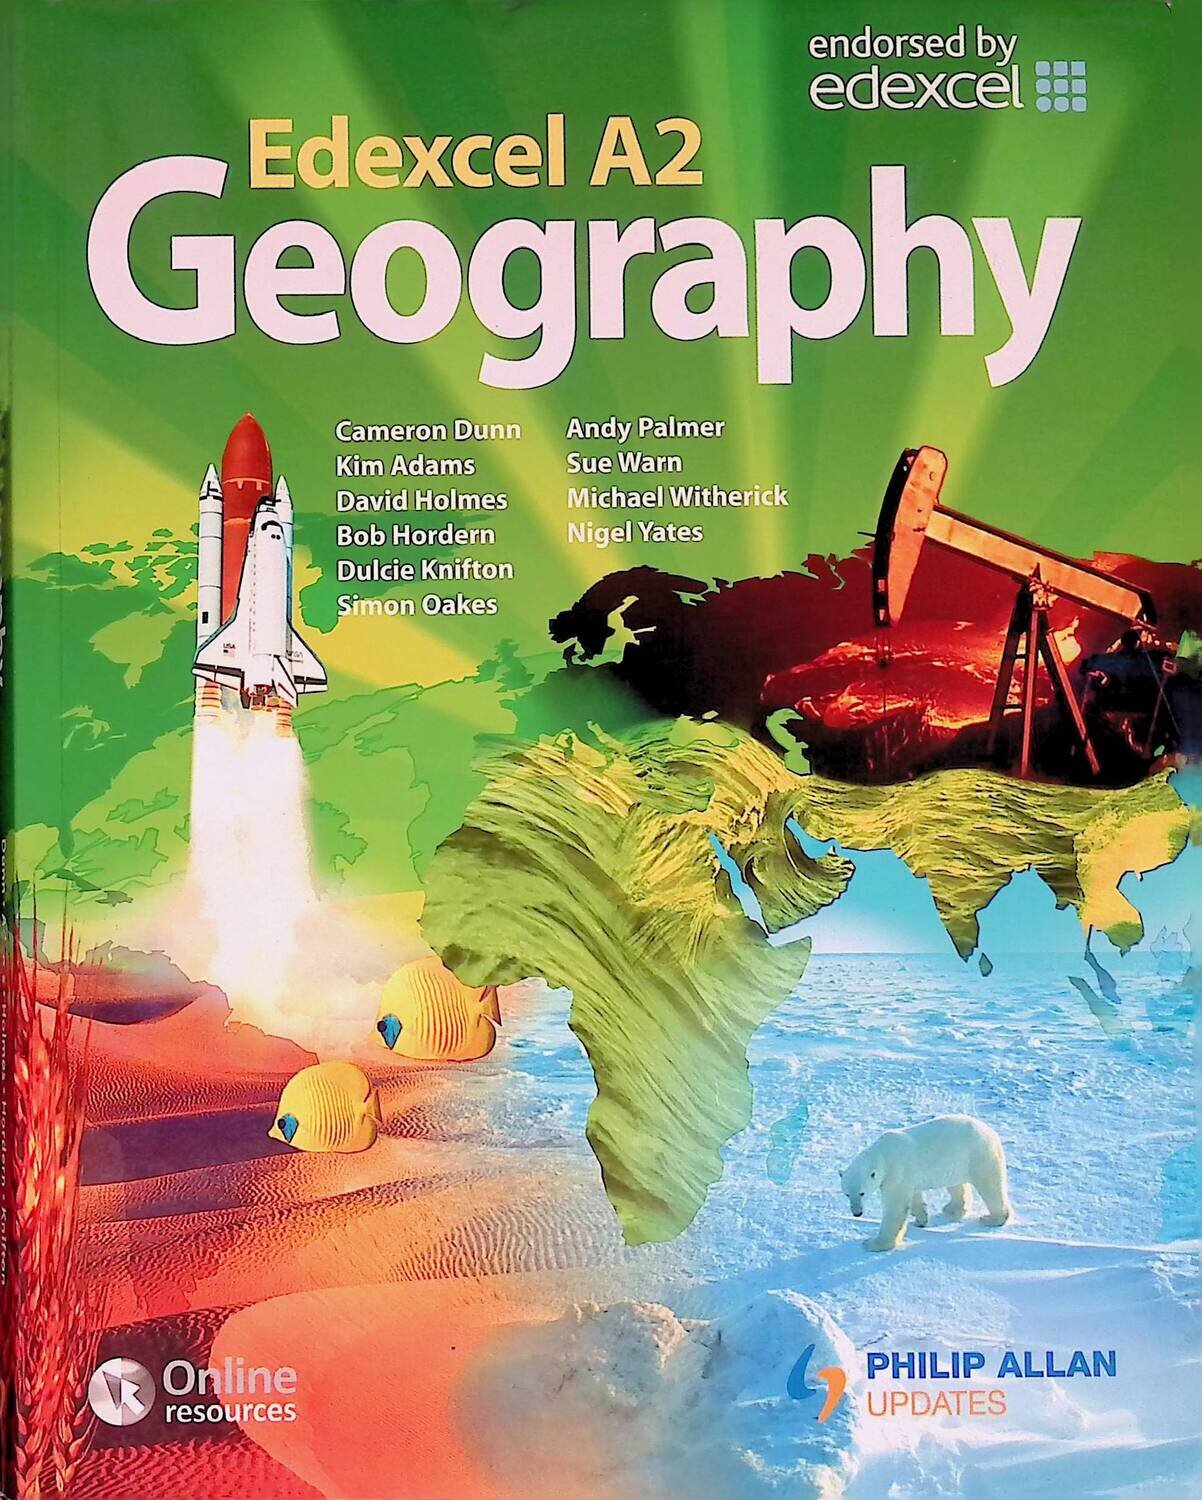 Edexcel. A2. Geography. Textbook; Dunn Cameron, Palmer Andy, Warn Sue